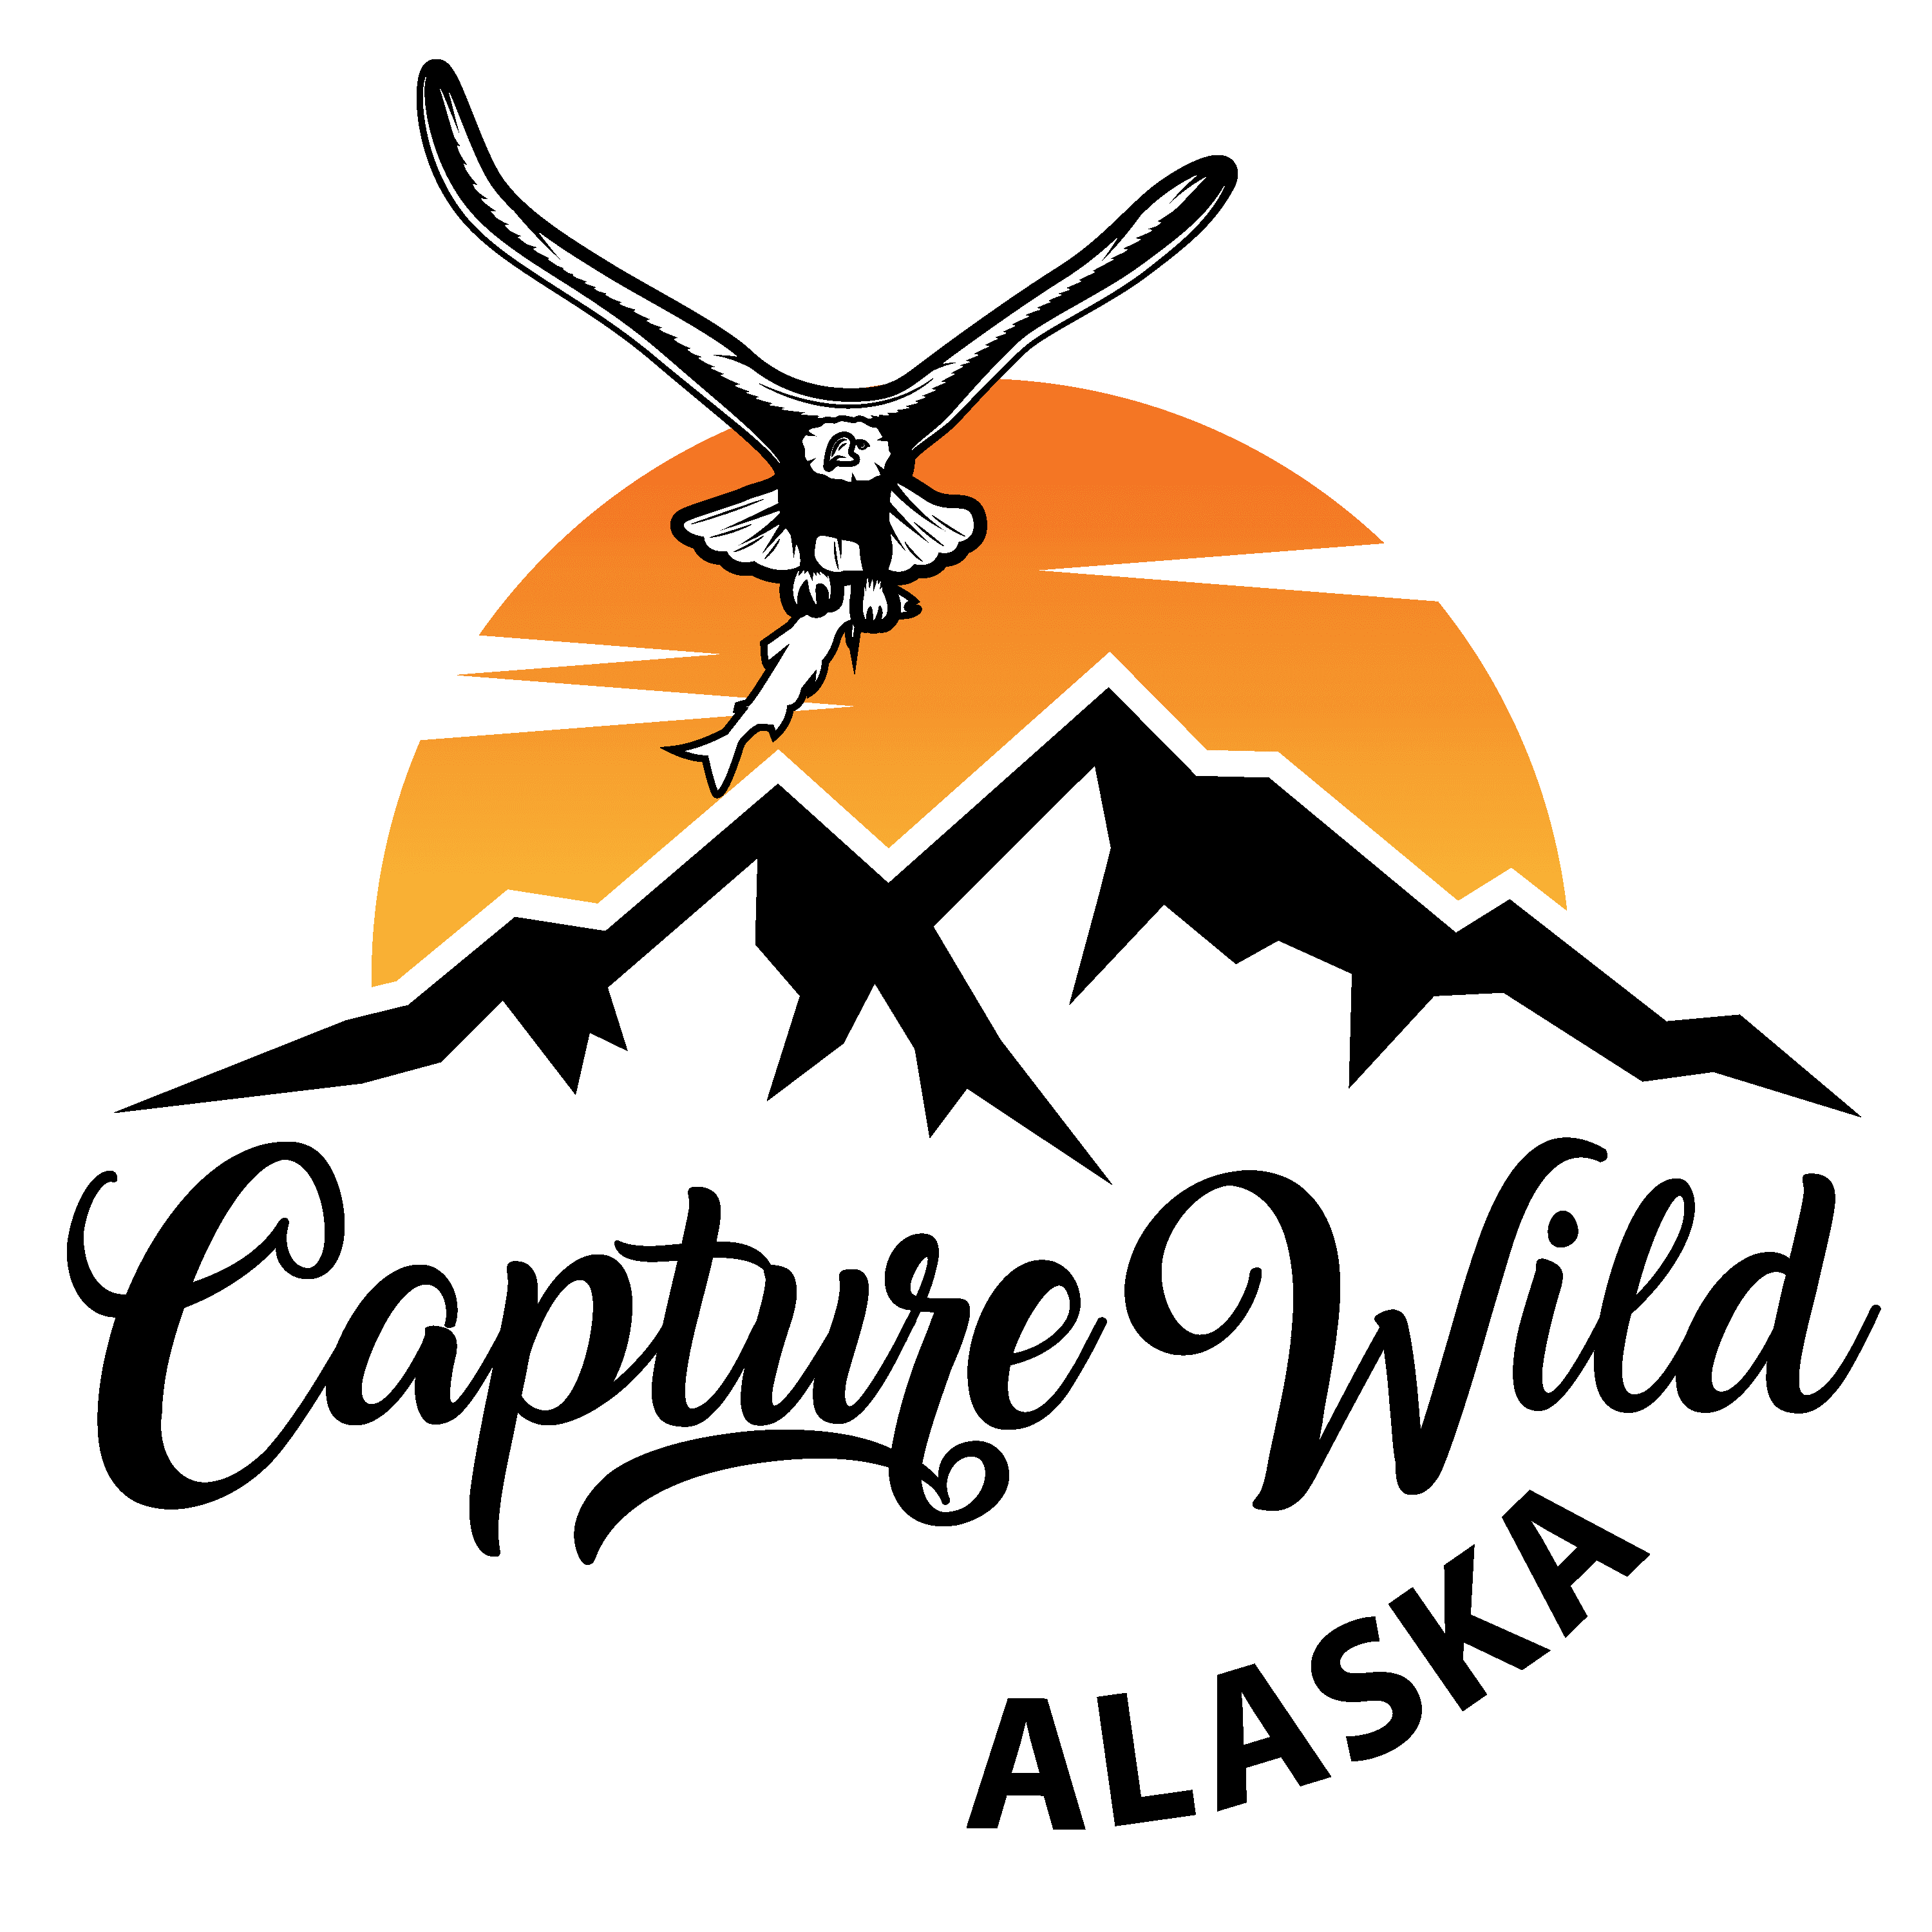 Capture Wild Alaska